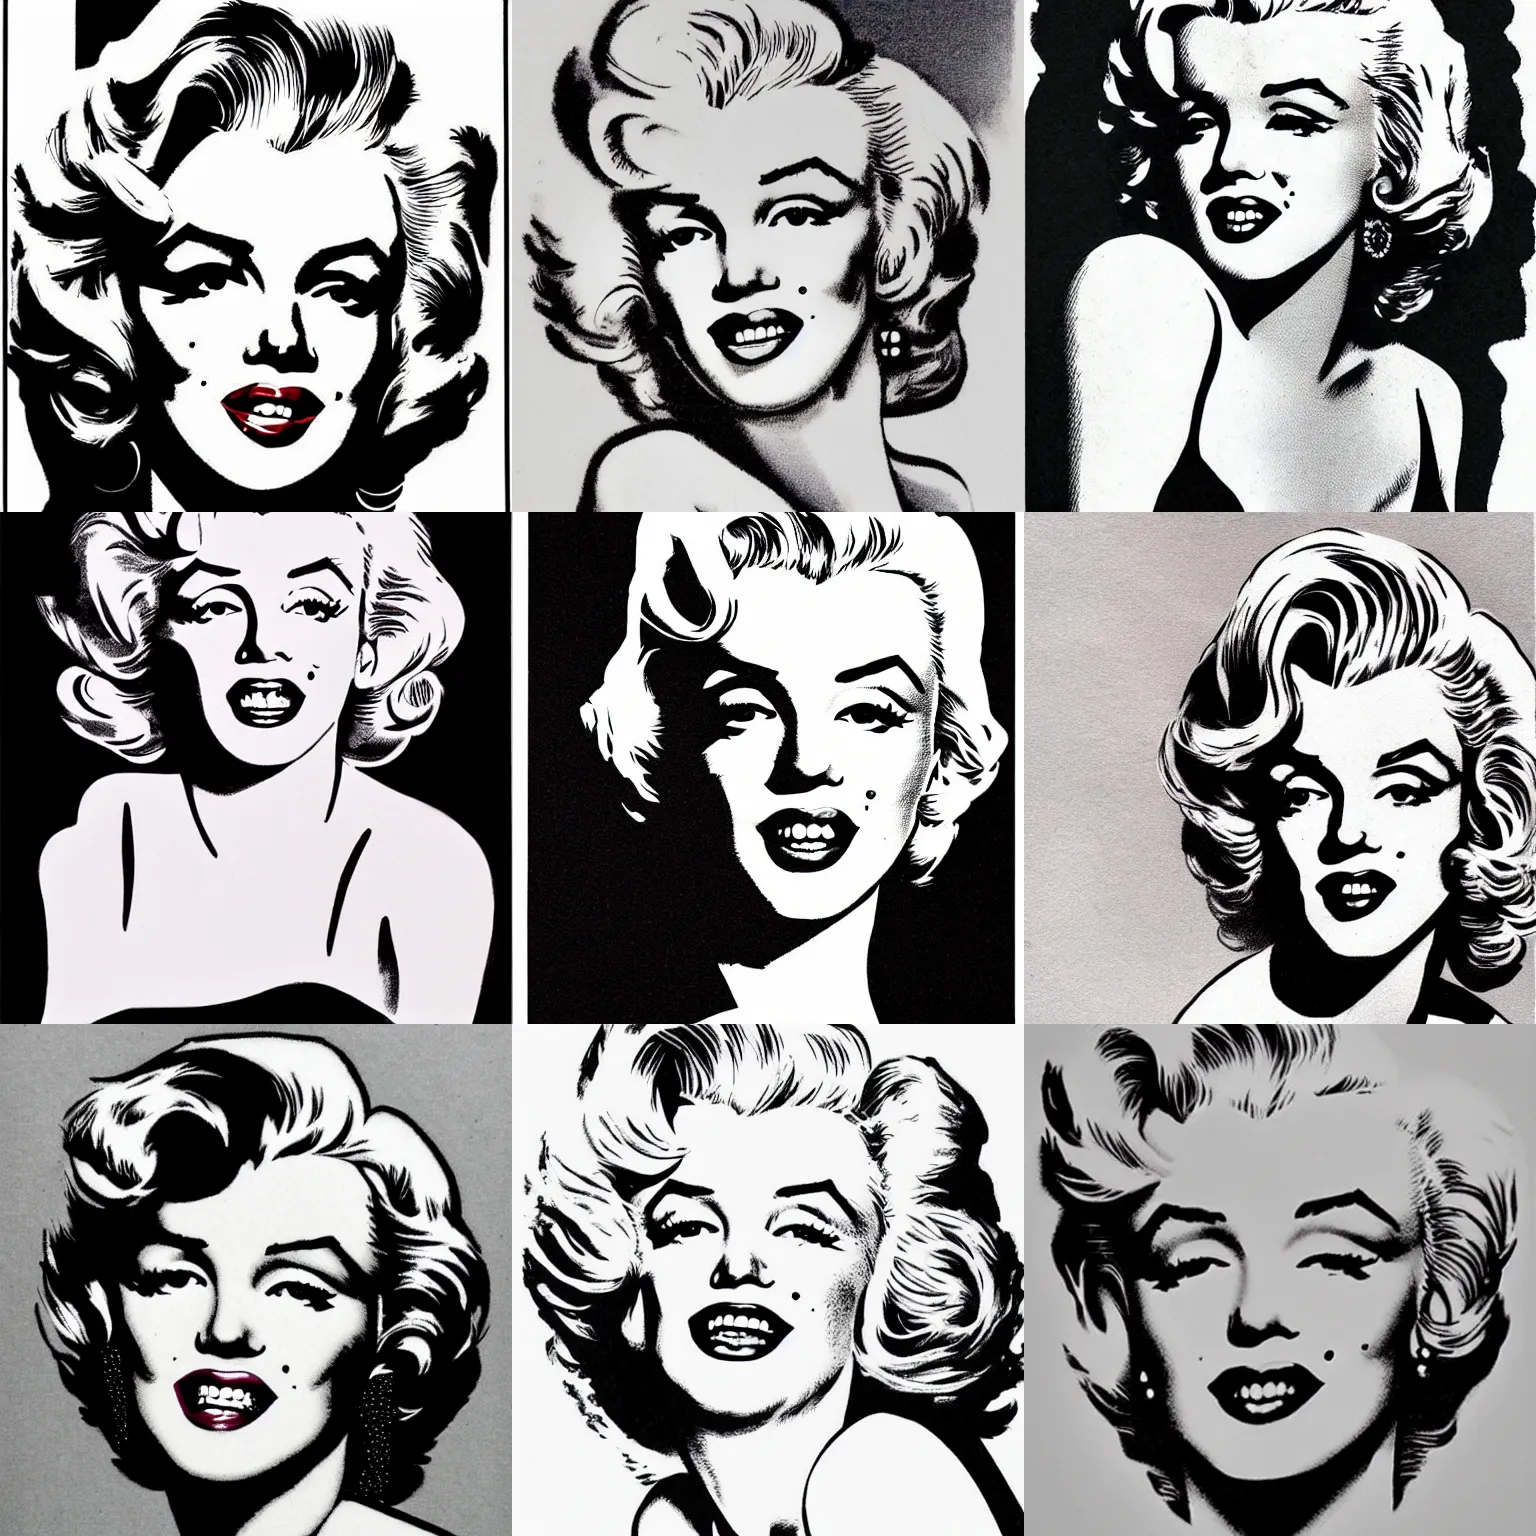 Prompt: Marilyn Monroe drawn by Guido Crepax